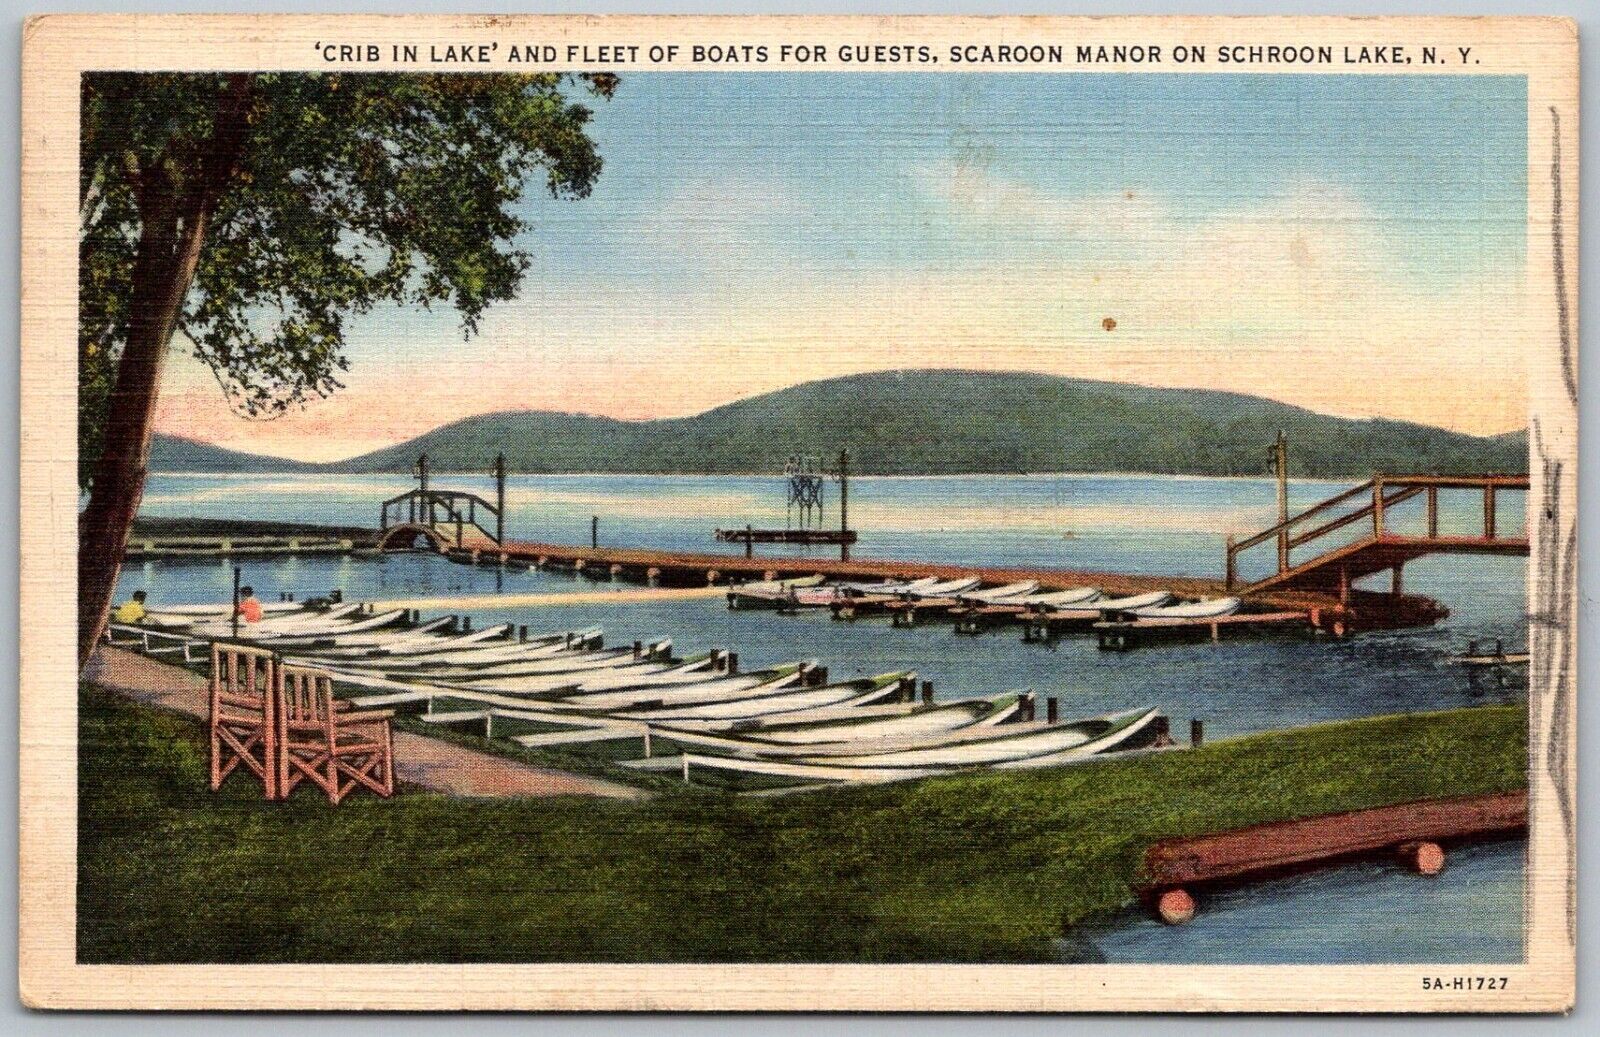 Schroon Lake New York 1937 Postcard Scaroon Manor Crib In Lake Fleet Of Boats